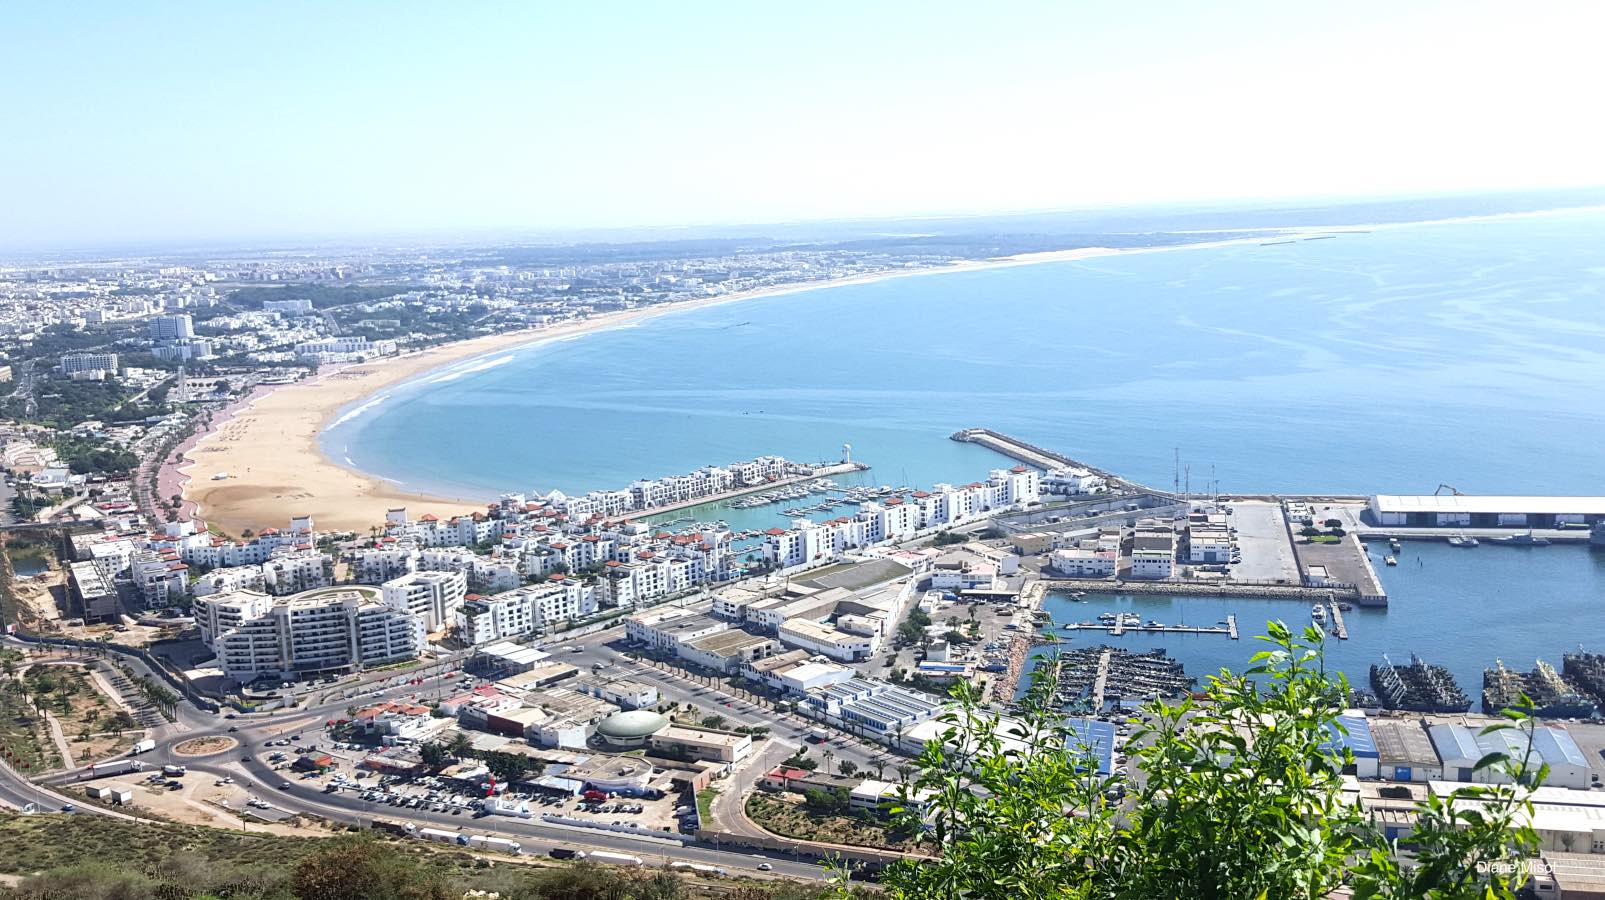 Aerial View of Agadir, Morocco